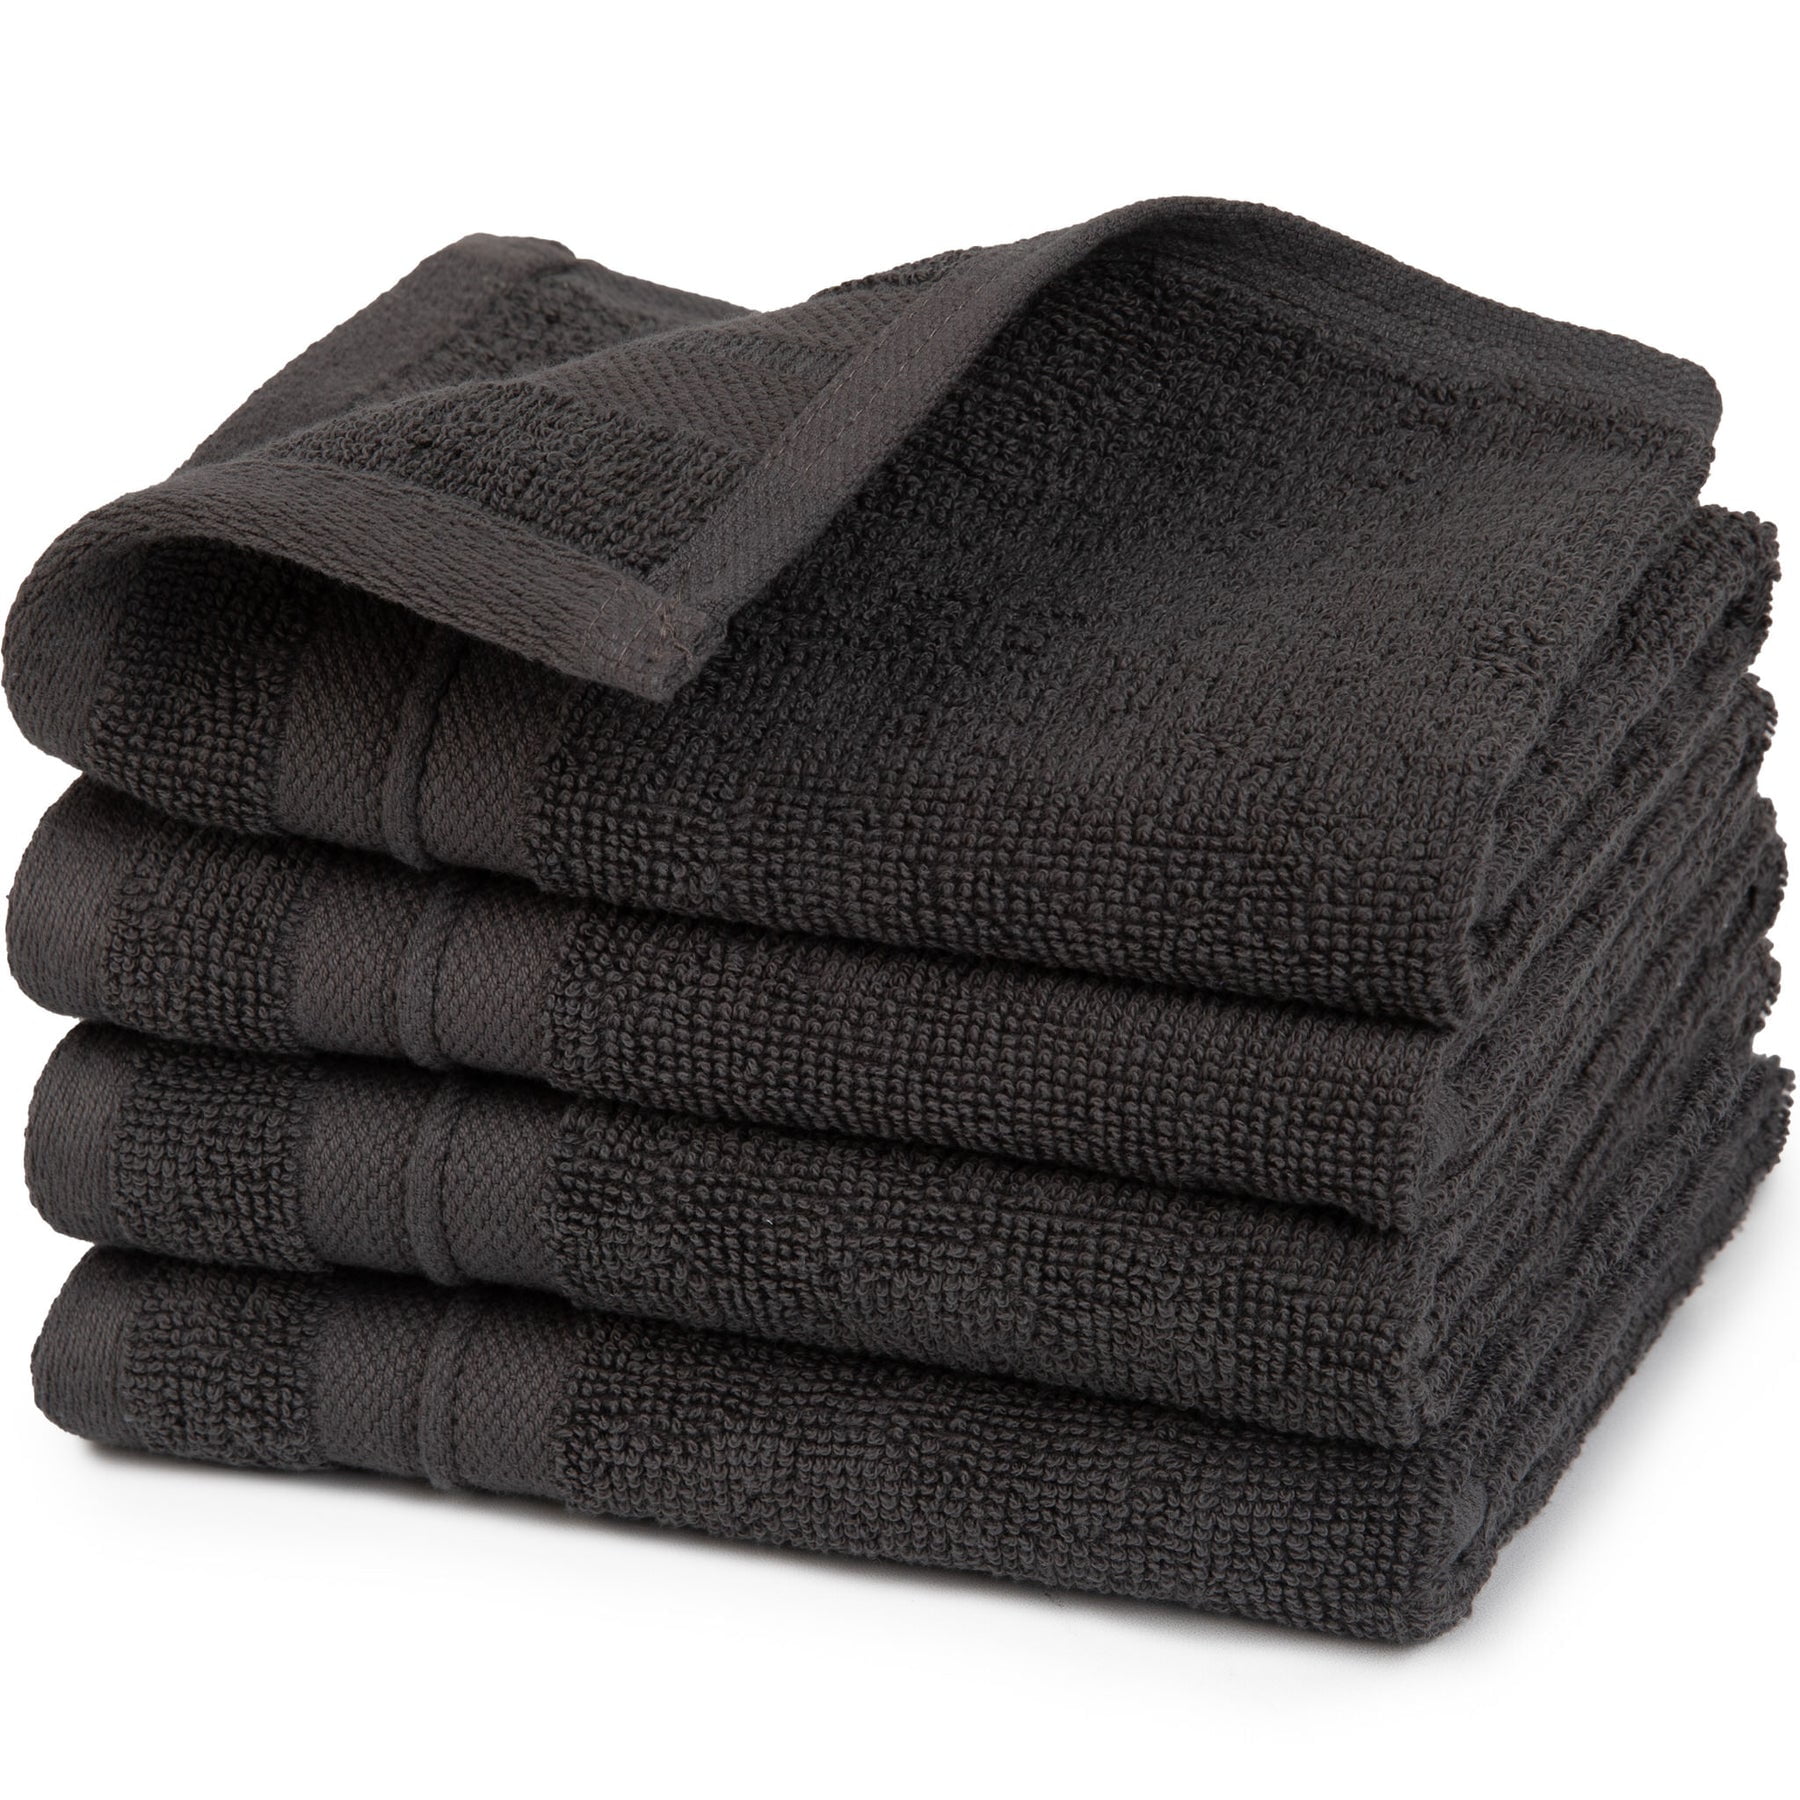 Three Piece Towel Set Jet Black Washcloths Men's Towels and Girls Towels, Cotton Washcloth, 1 Count